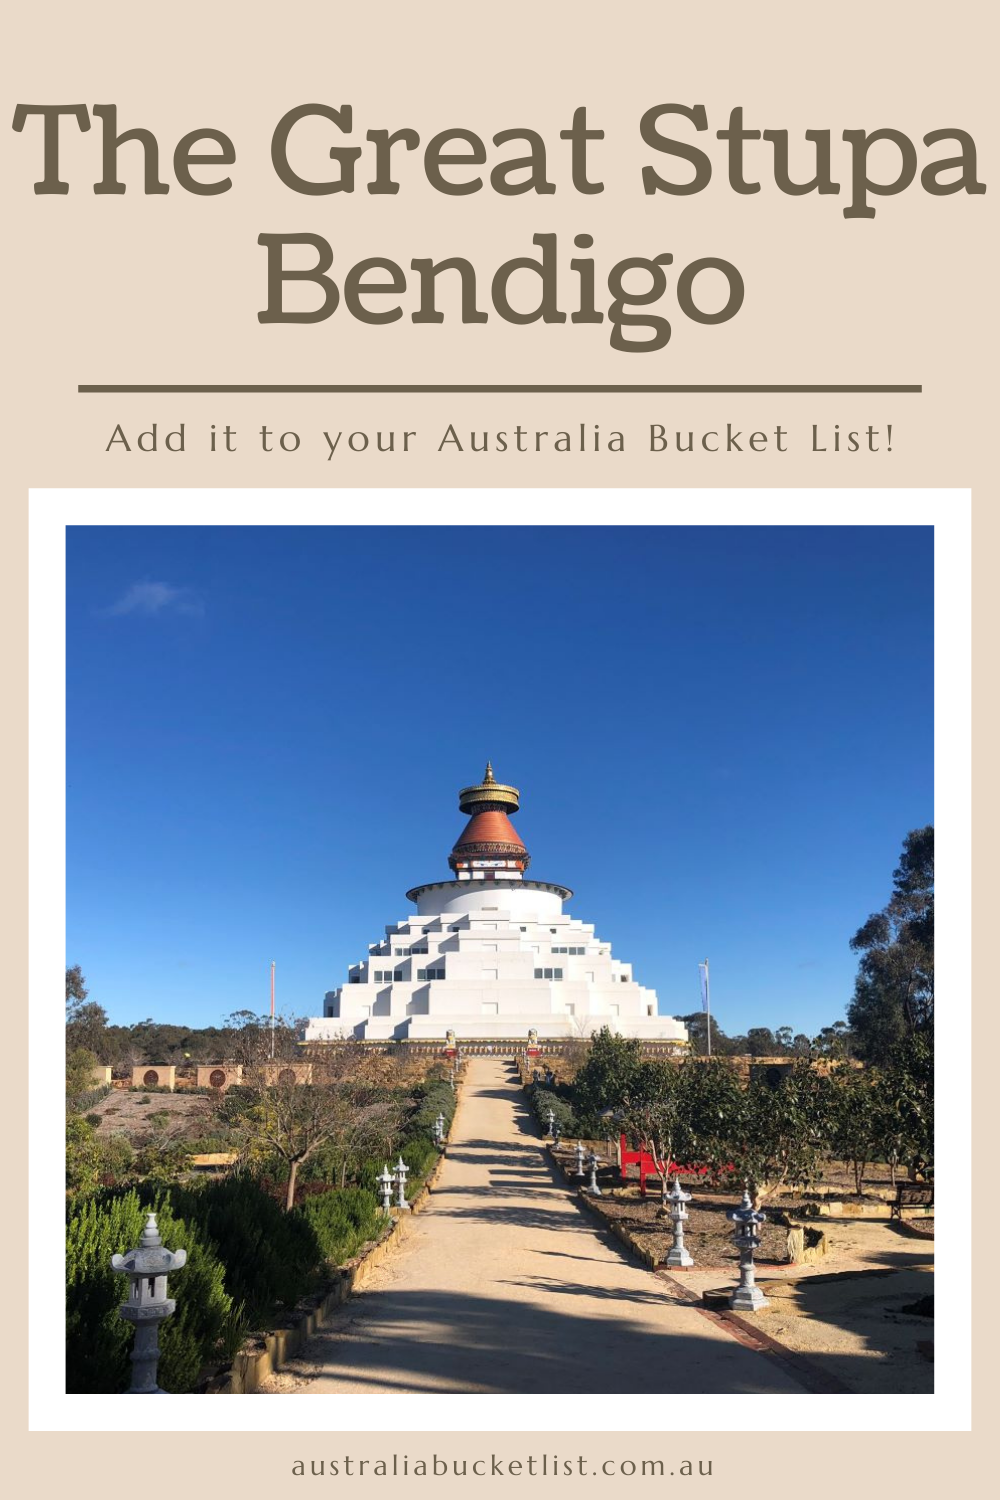 The Great Stupa Bendigo - Australia Bucket List